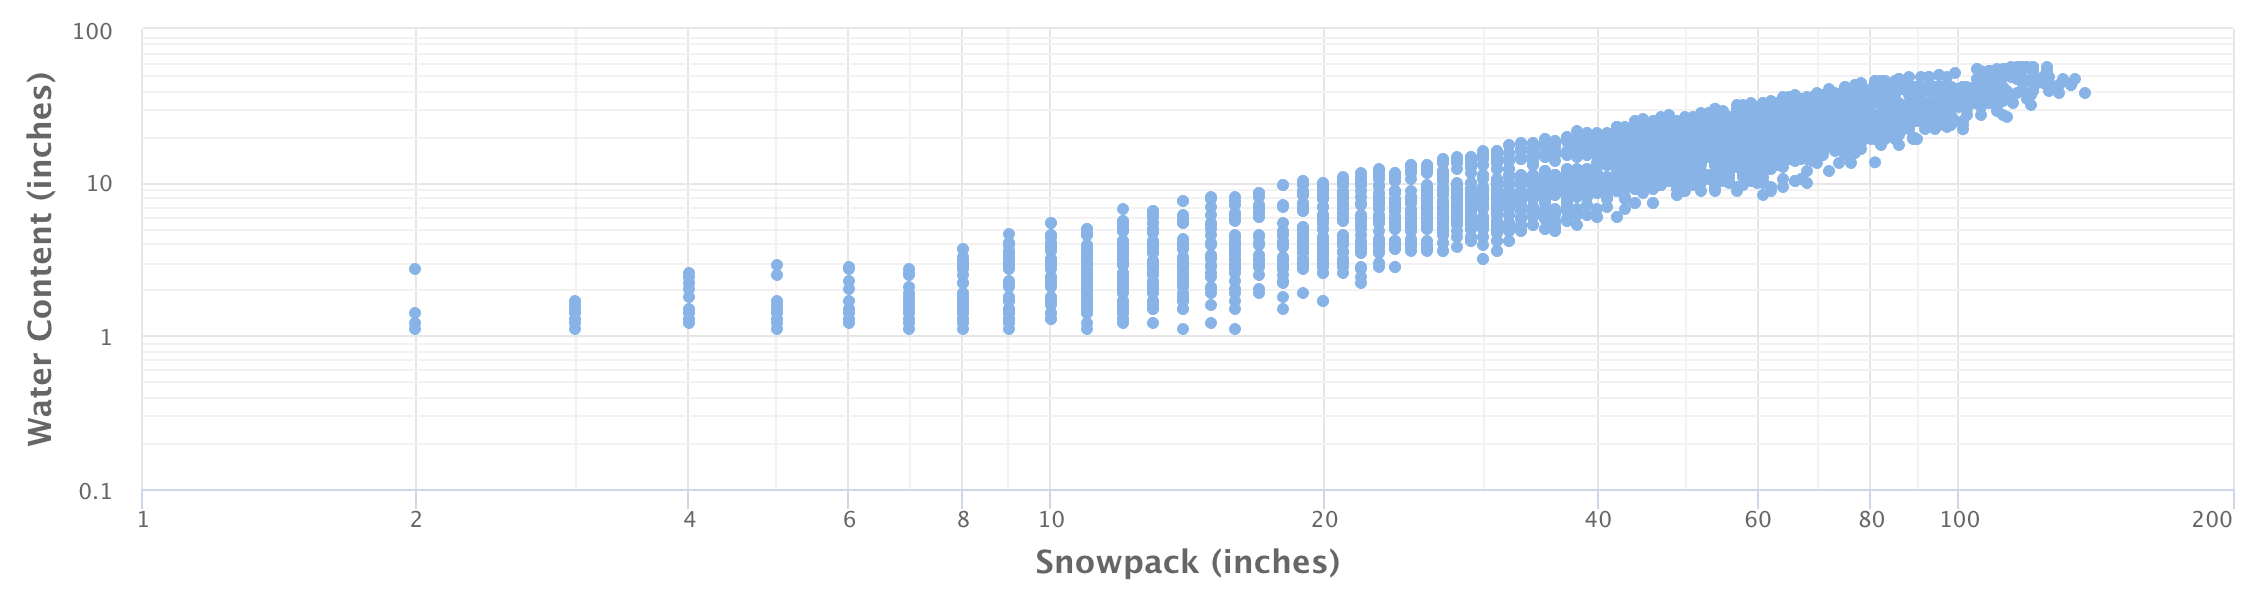 snowpack density image